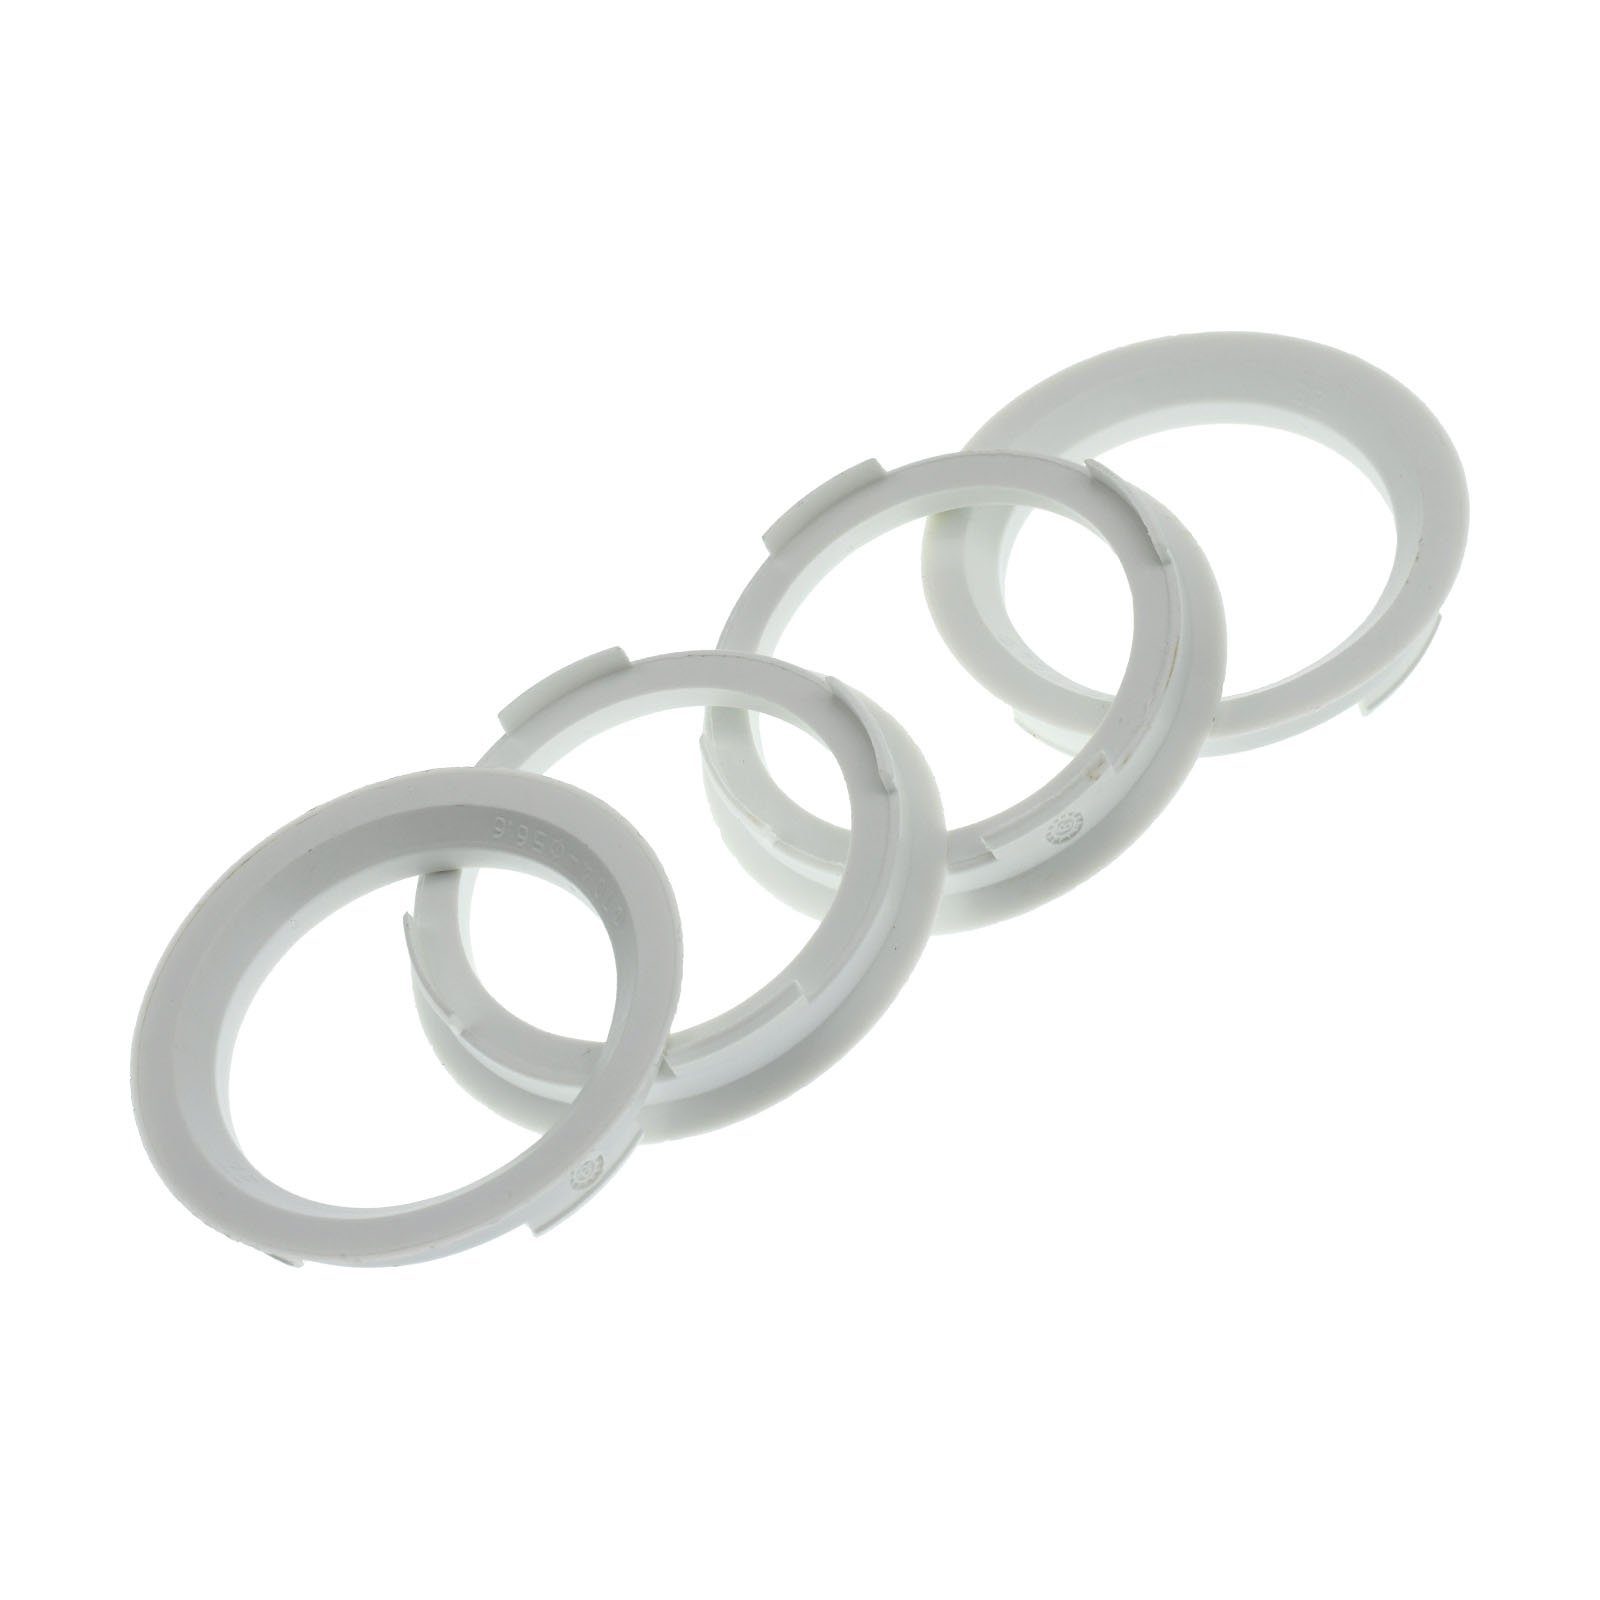 RKC Reifenstift 4X Zentrierringe Weiß Felgen Ringe + 1x Reifen Kreide Fett Stift, Maße: 70,4 x 56,6 mm